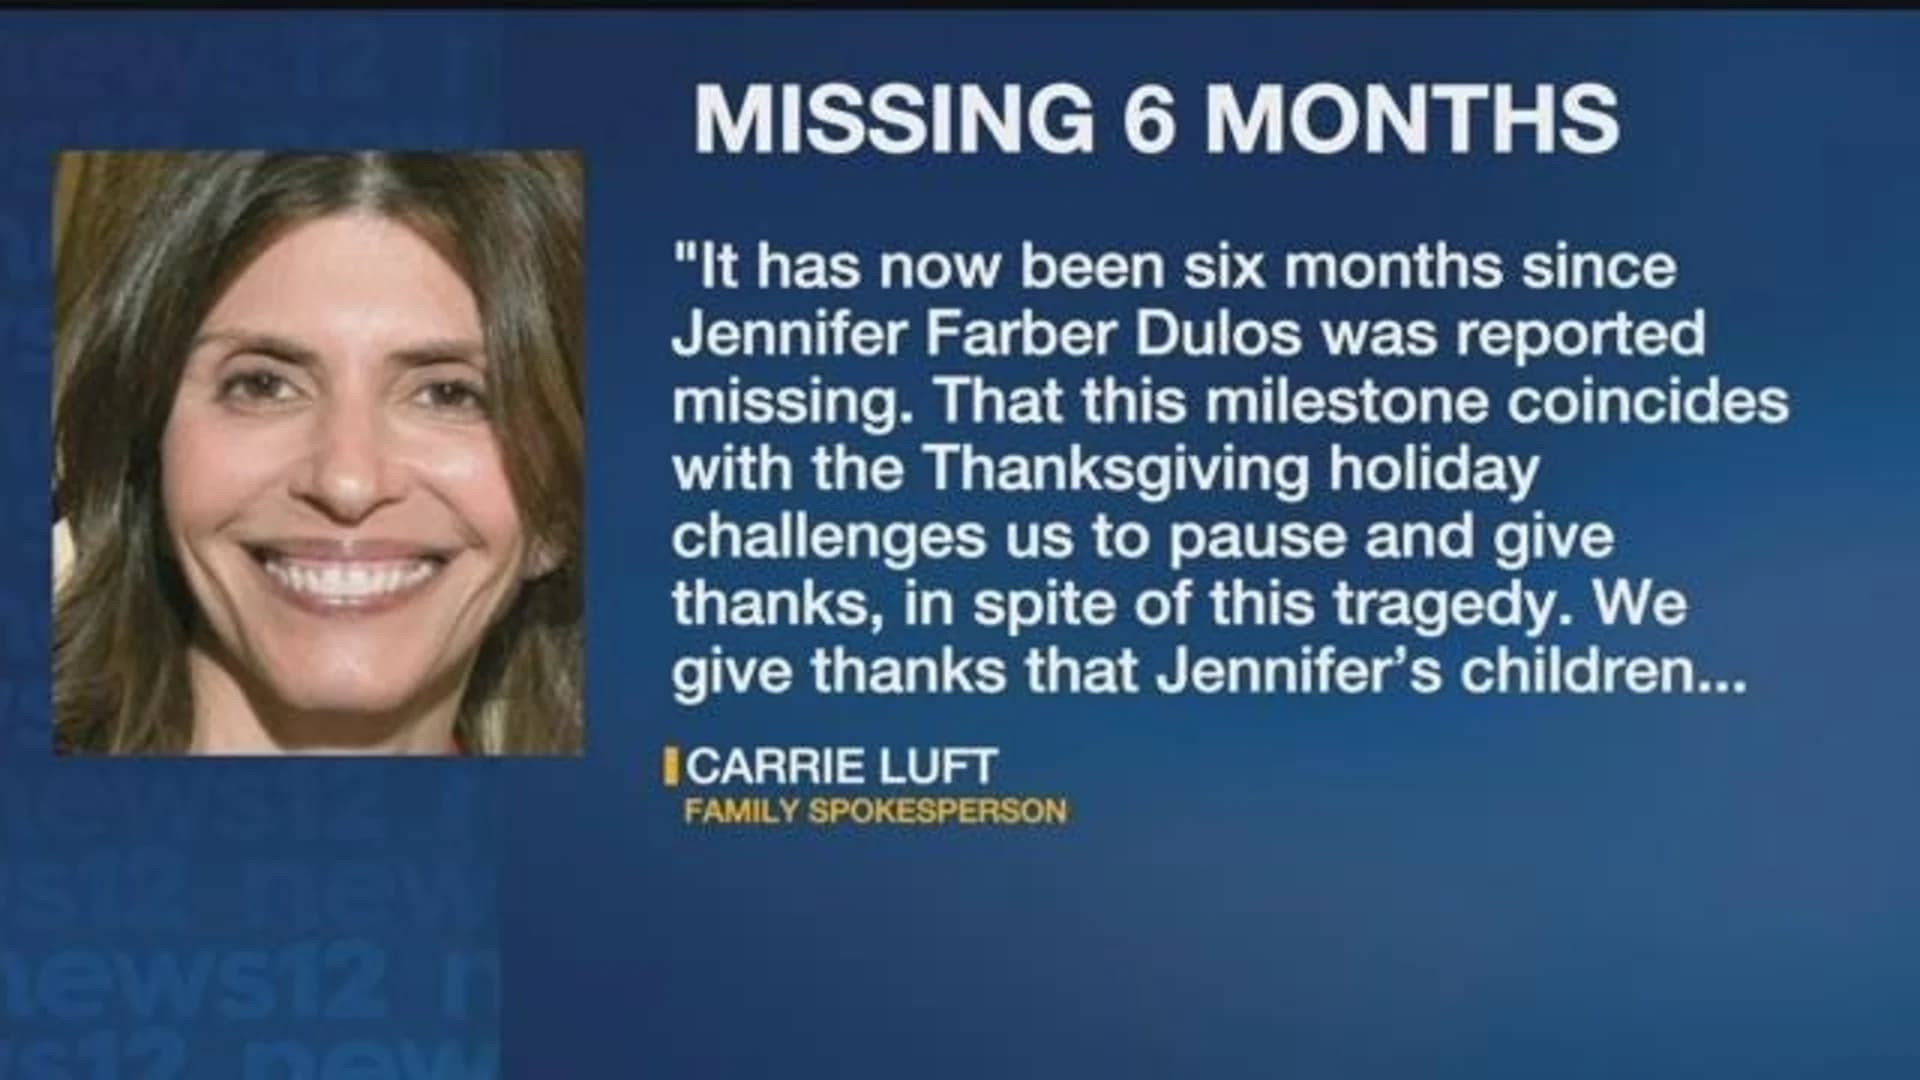 Jennifer Dulos spokeswoman releases statement marking 6 months since disappearance